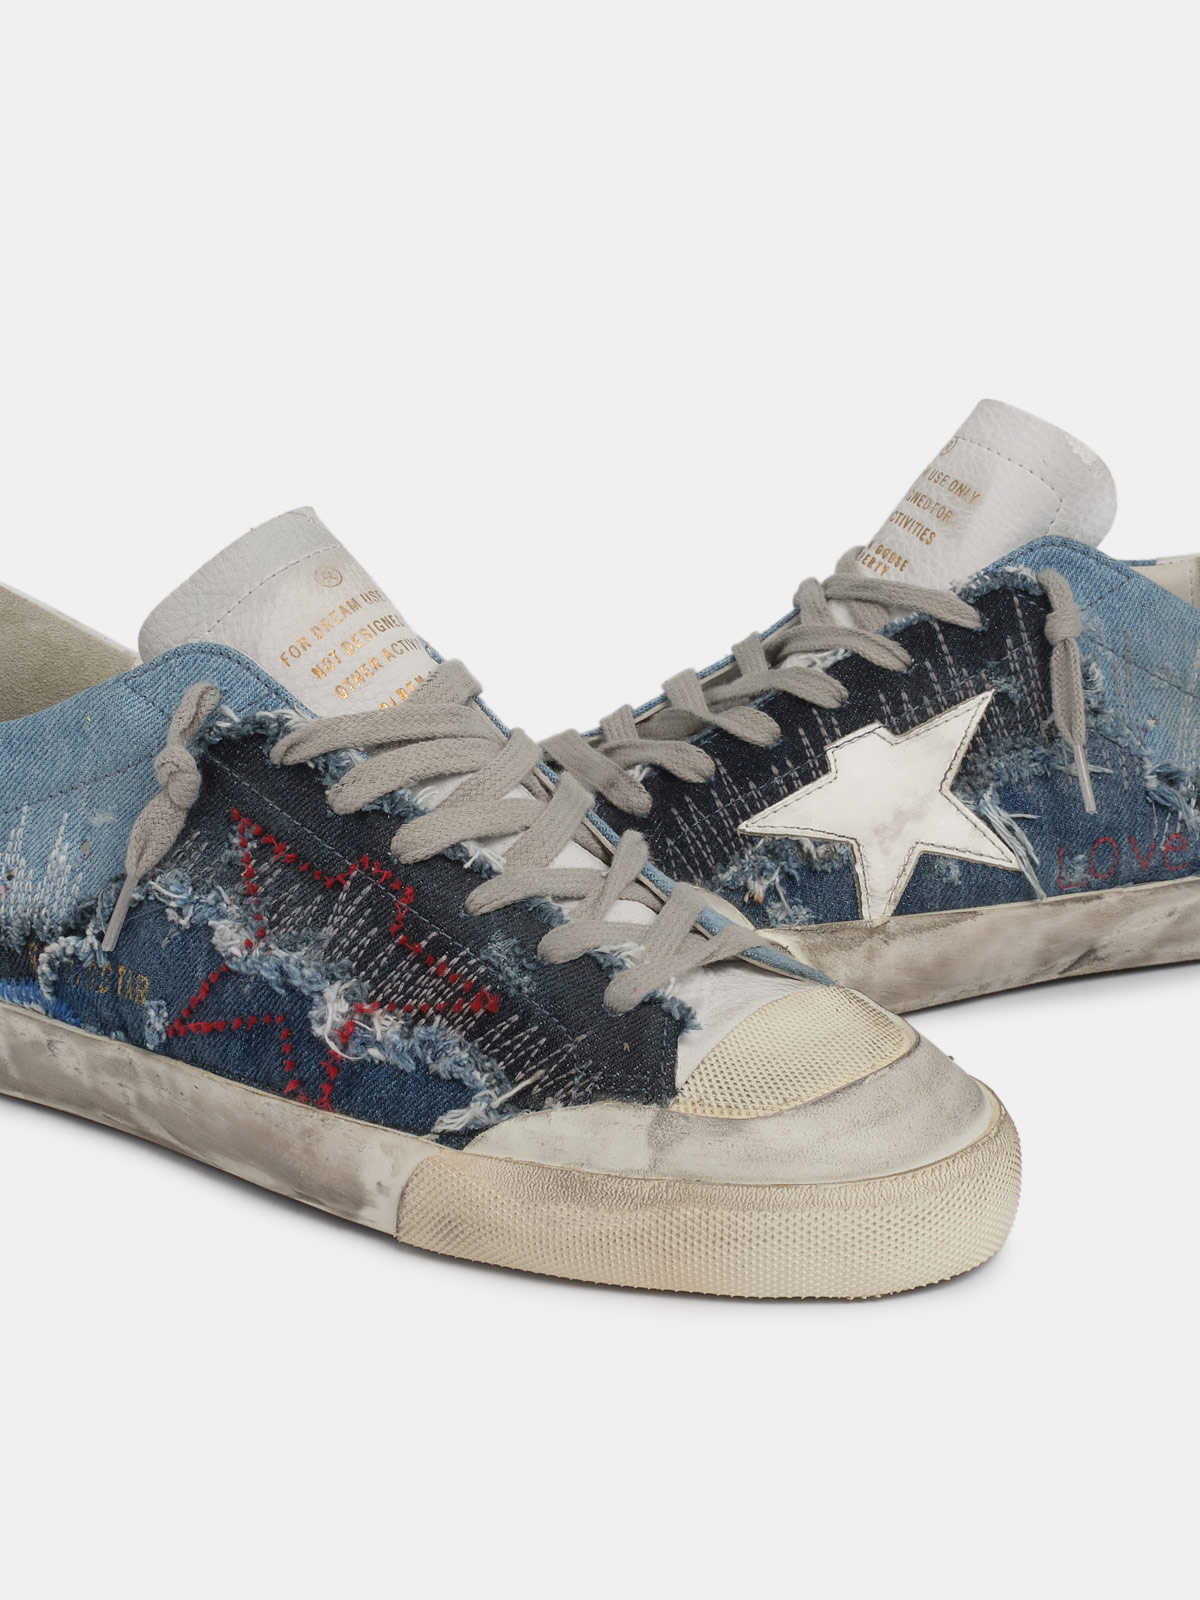 Saint Laurent Denim Sneakers With Star Detail